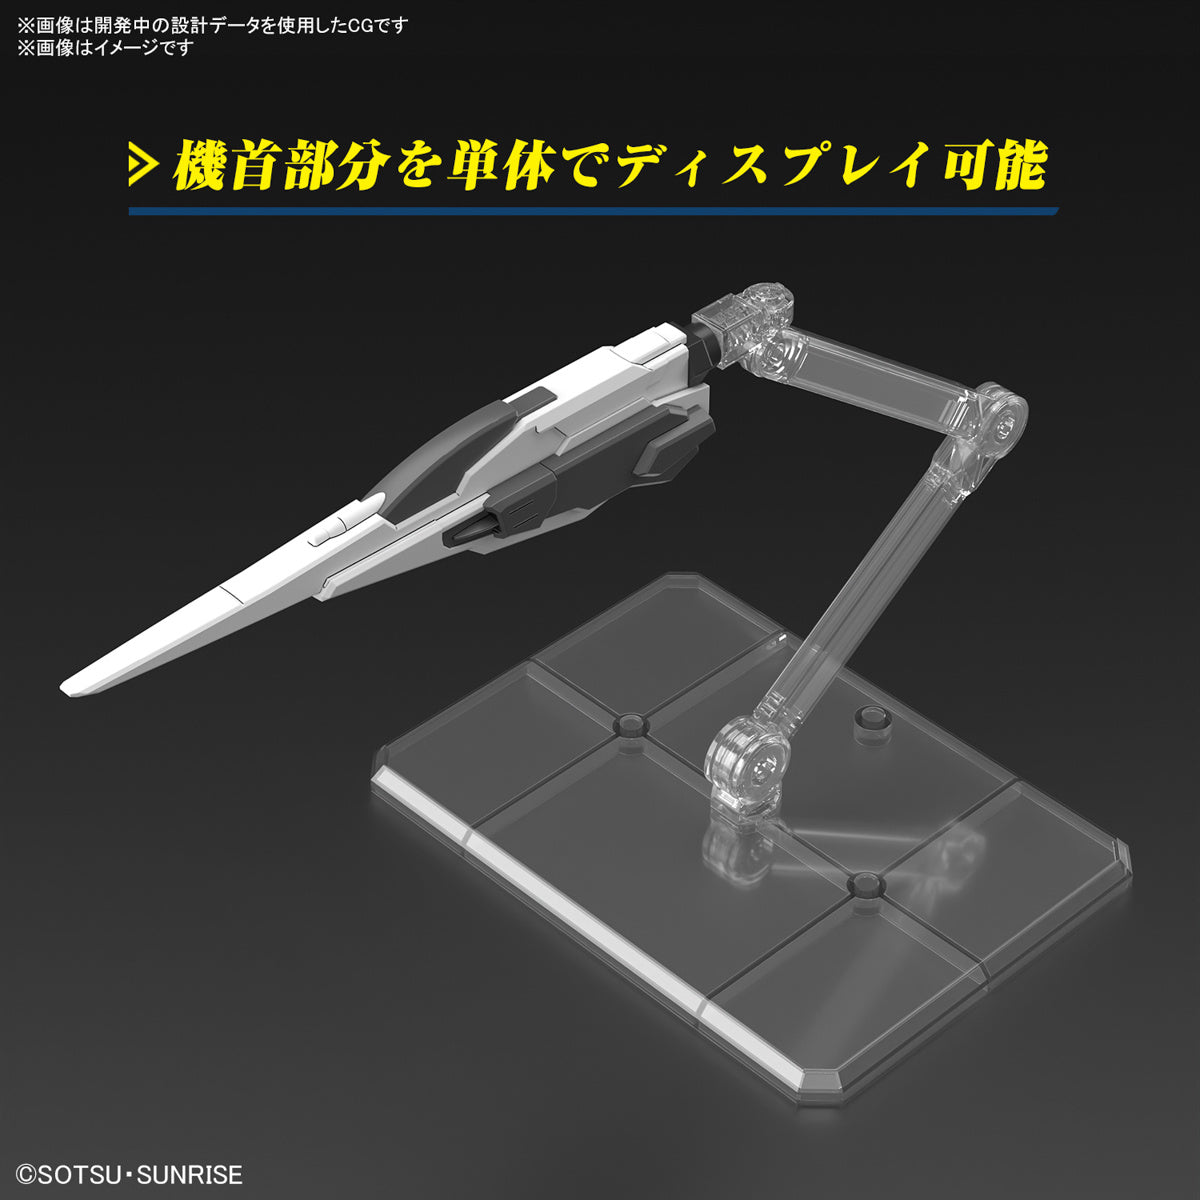 [PRE-ORDER] HG 1/144 Destiny Gundam Spec II & Zeus Sillouette